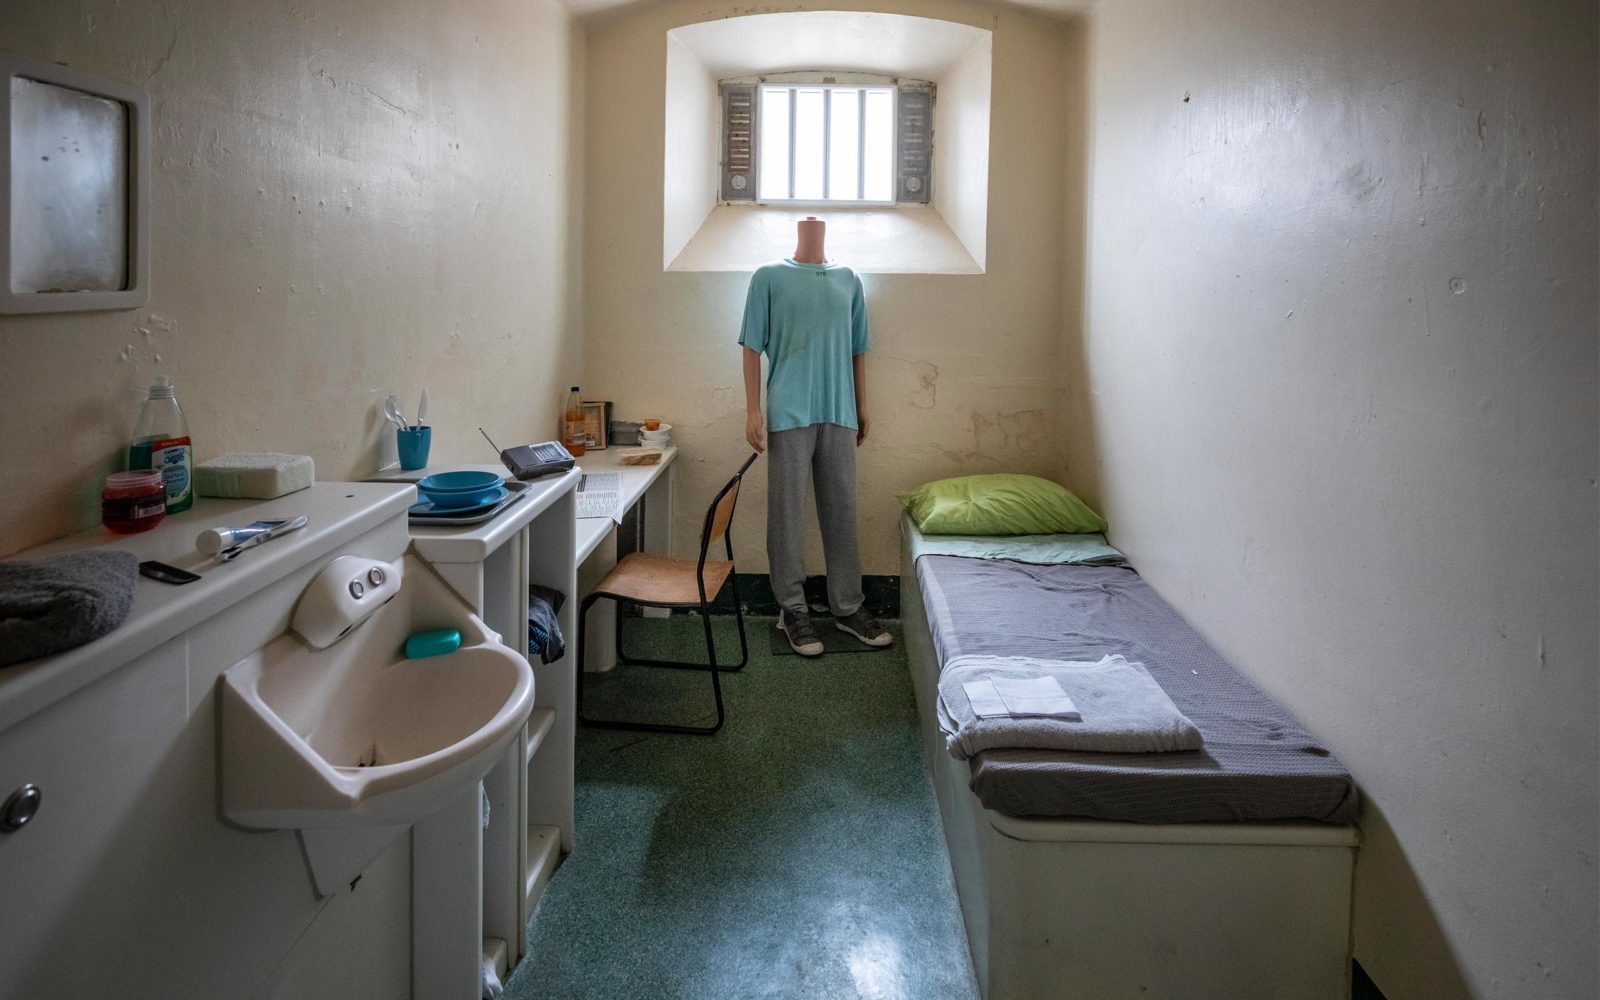 Shrewsbury Prison AS & A Level Trips